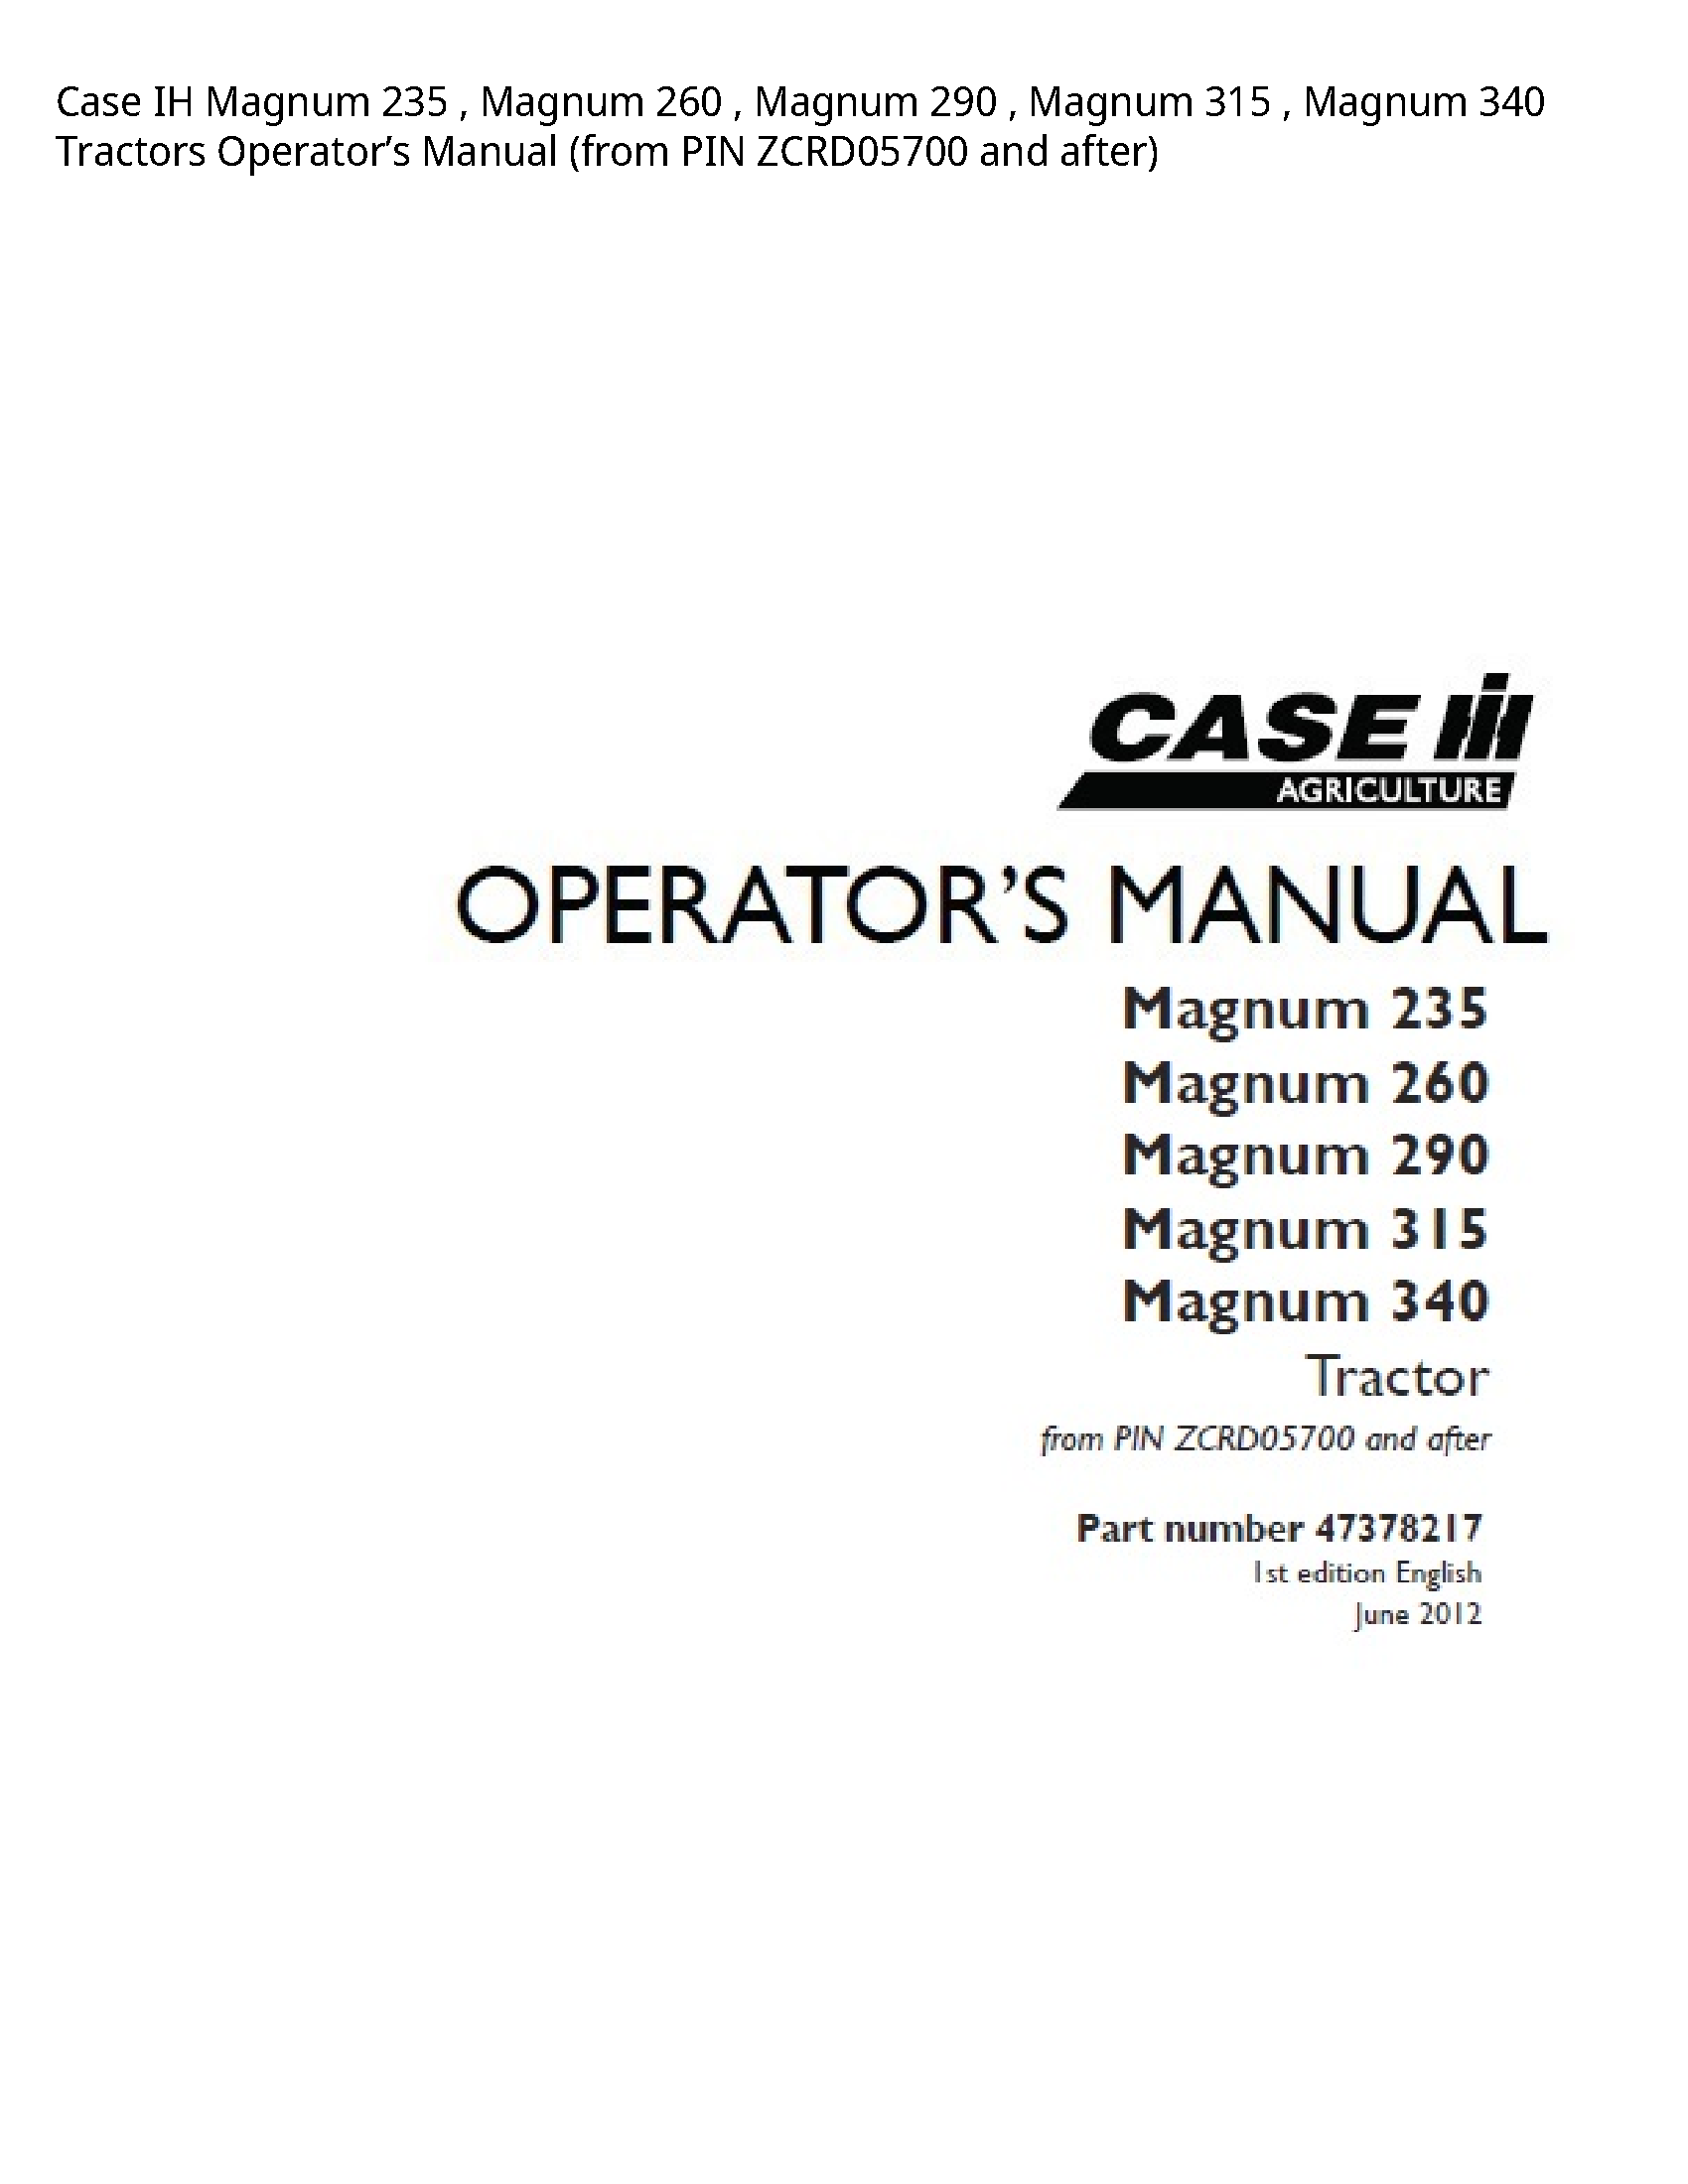 Case/Case IH 235 IH Magnum Magnum Magnum Magnum Magnum Tractors Operator’s manual